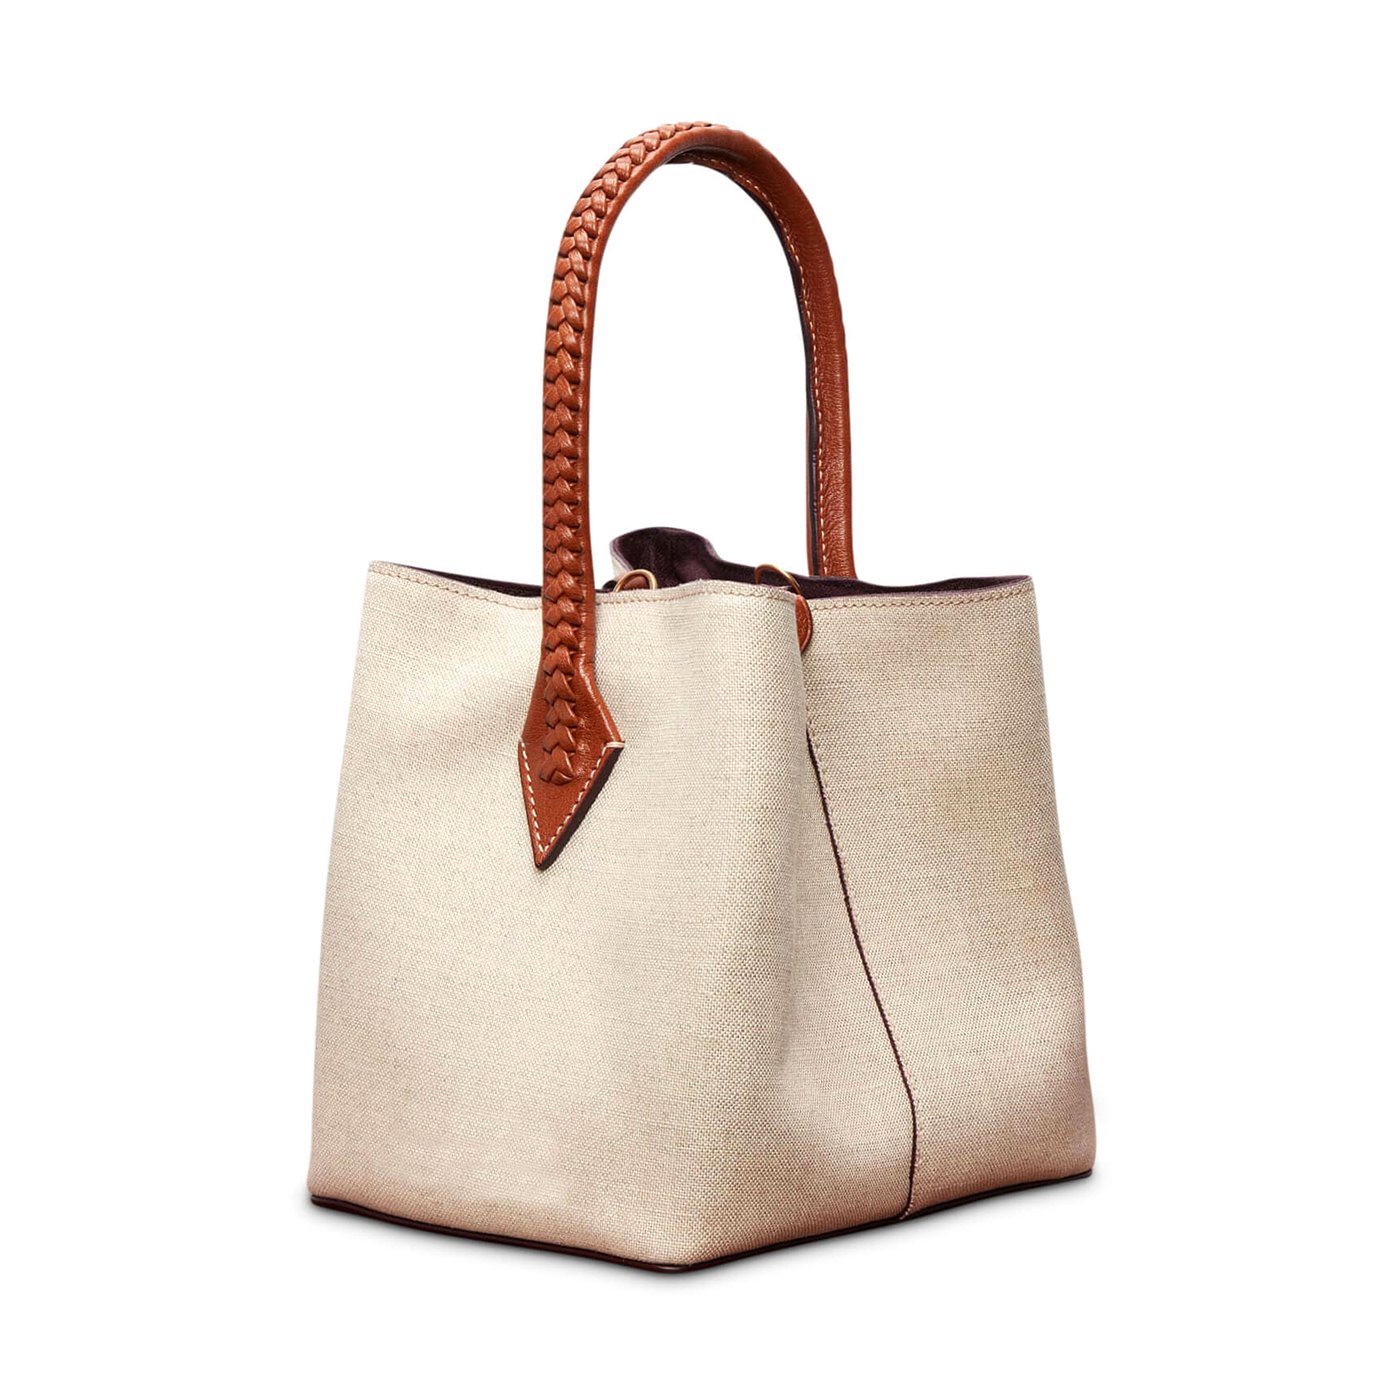 New Louis Vuitton White Tan Large Foundation Shoulder Tote Bag